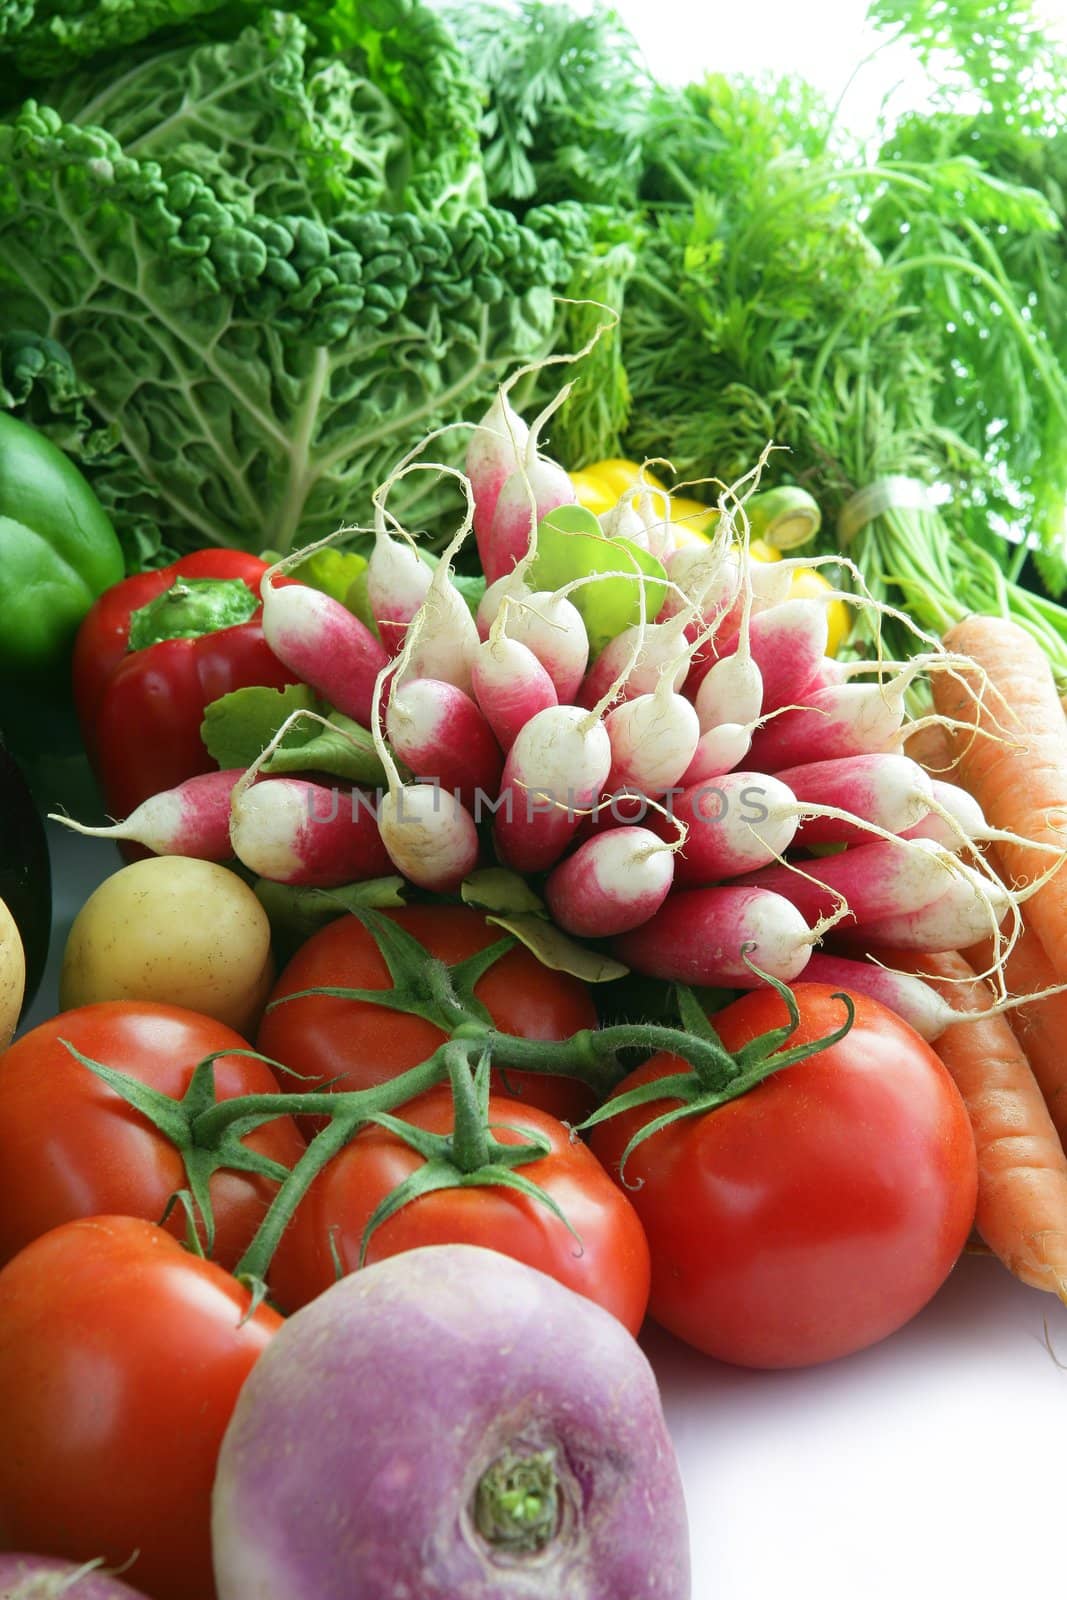 Pile of fresh vegetables by phovoir